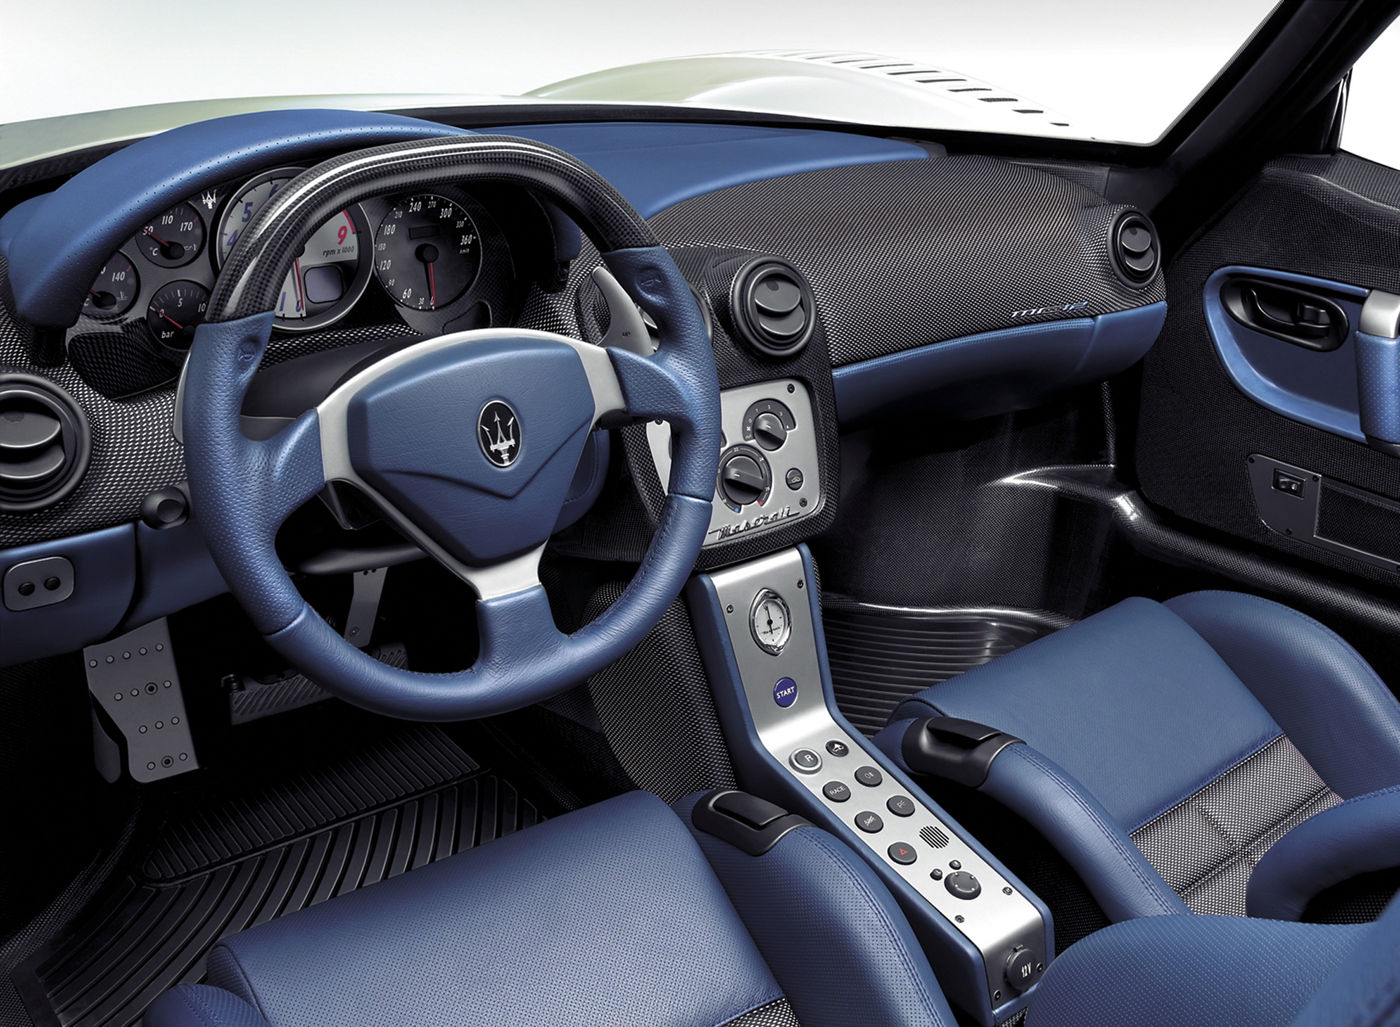 2004 Maserati MC12 Stradale (road-going) - the GT racing car interior